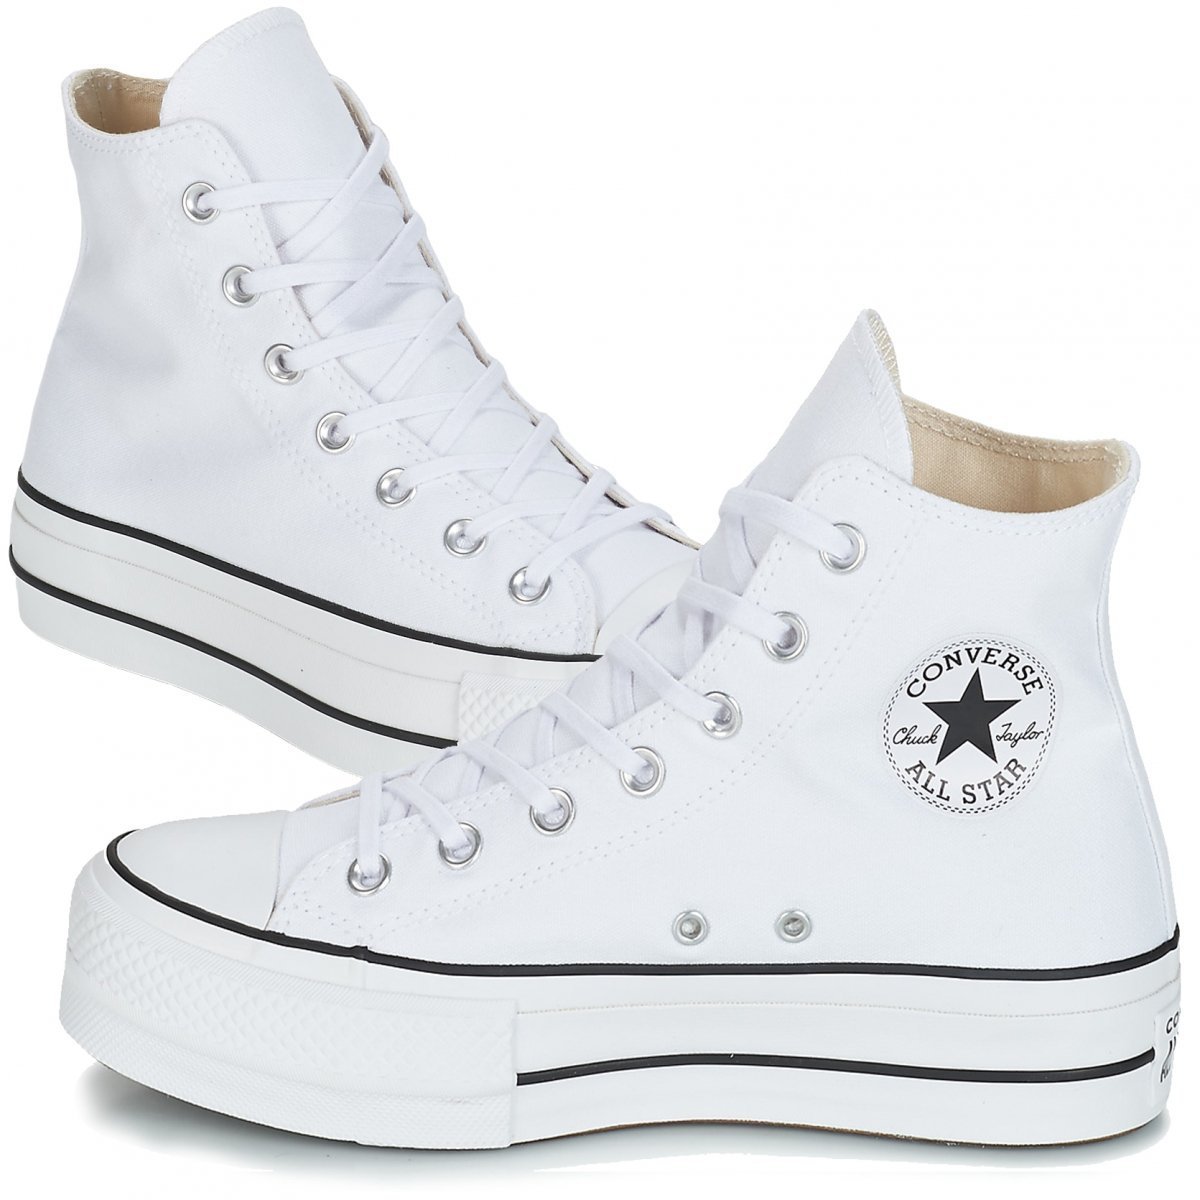 Tale notifikation holdall Converse buty trampki damskie białe wysokie platforma 560846C 37,5 -  Converse | Sport Sklep EMPIK.COM